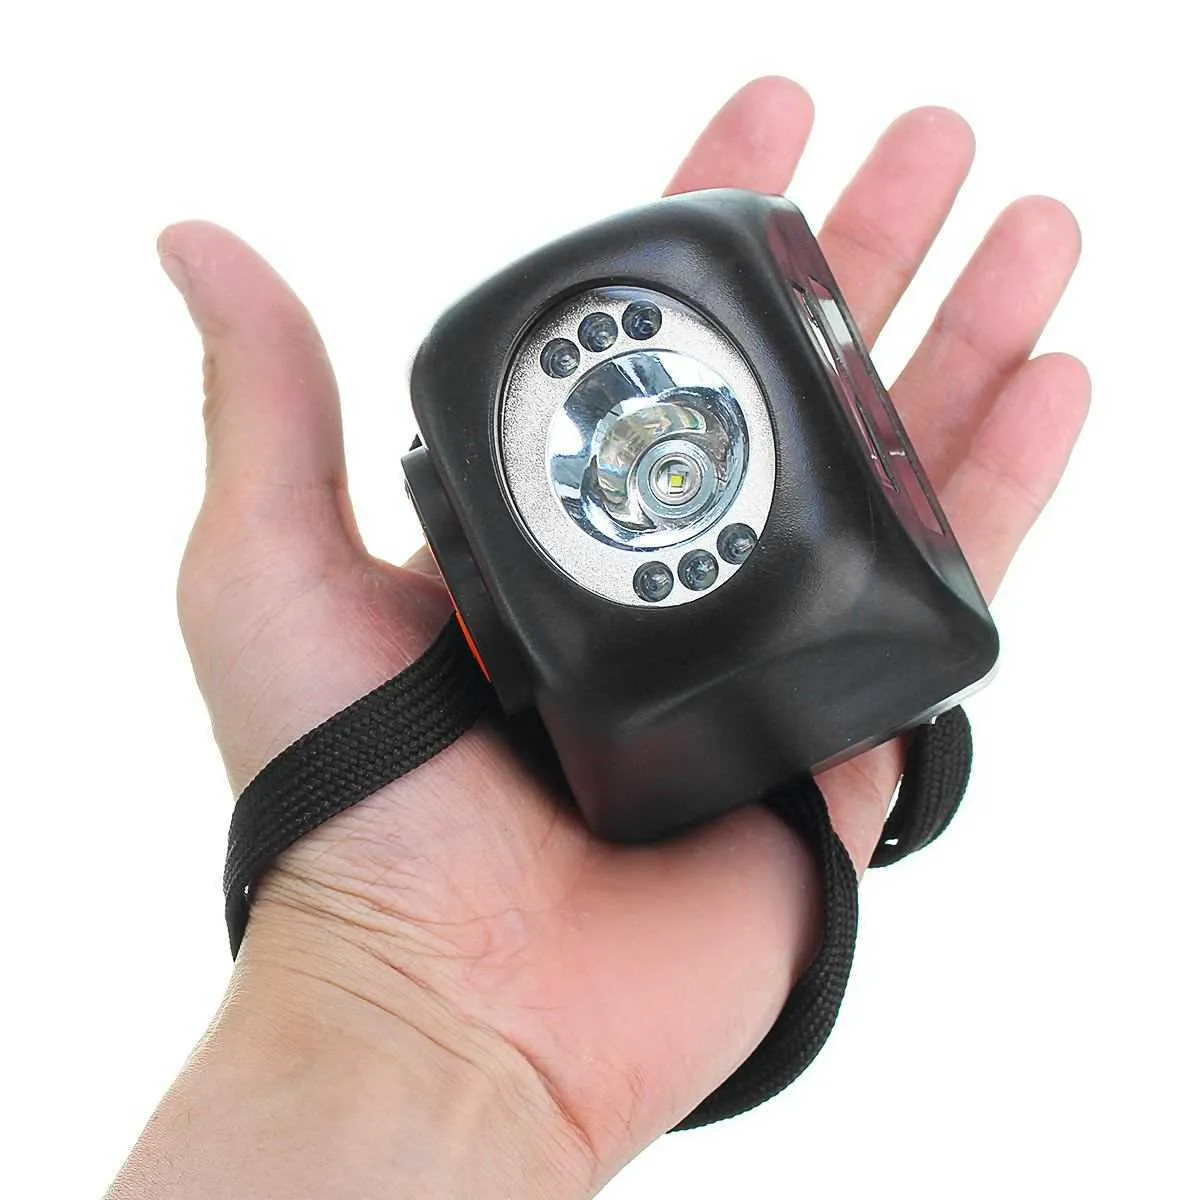 Display LED 3W 4500LM LED Farol Lâmpada Lanterna sem fio Segurança Liion Bateria Recarregável Miner Cap Light P08208521194